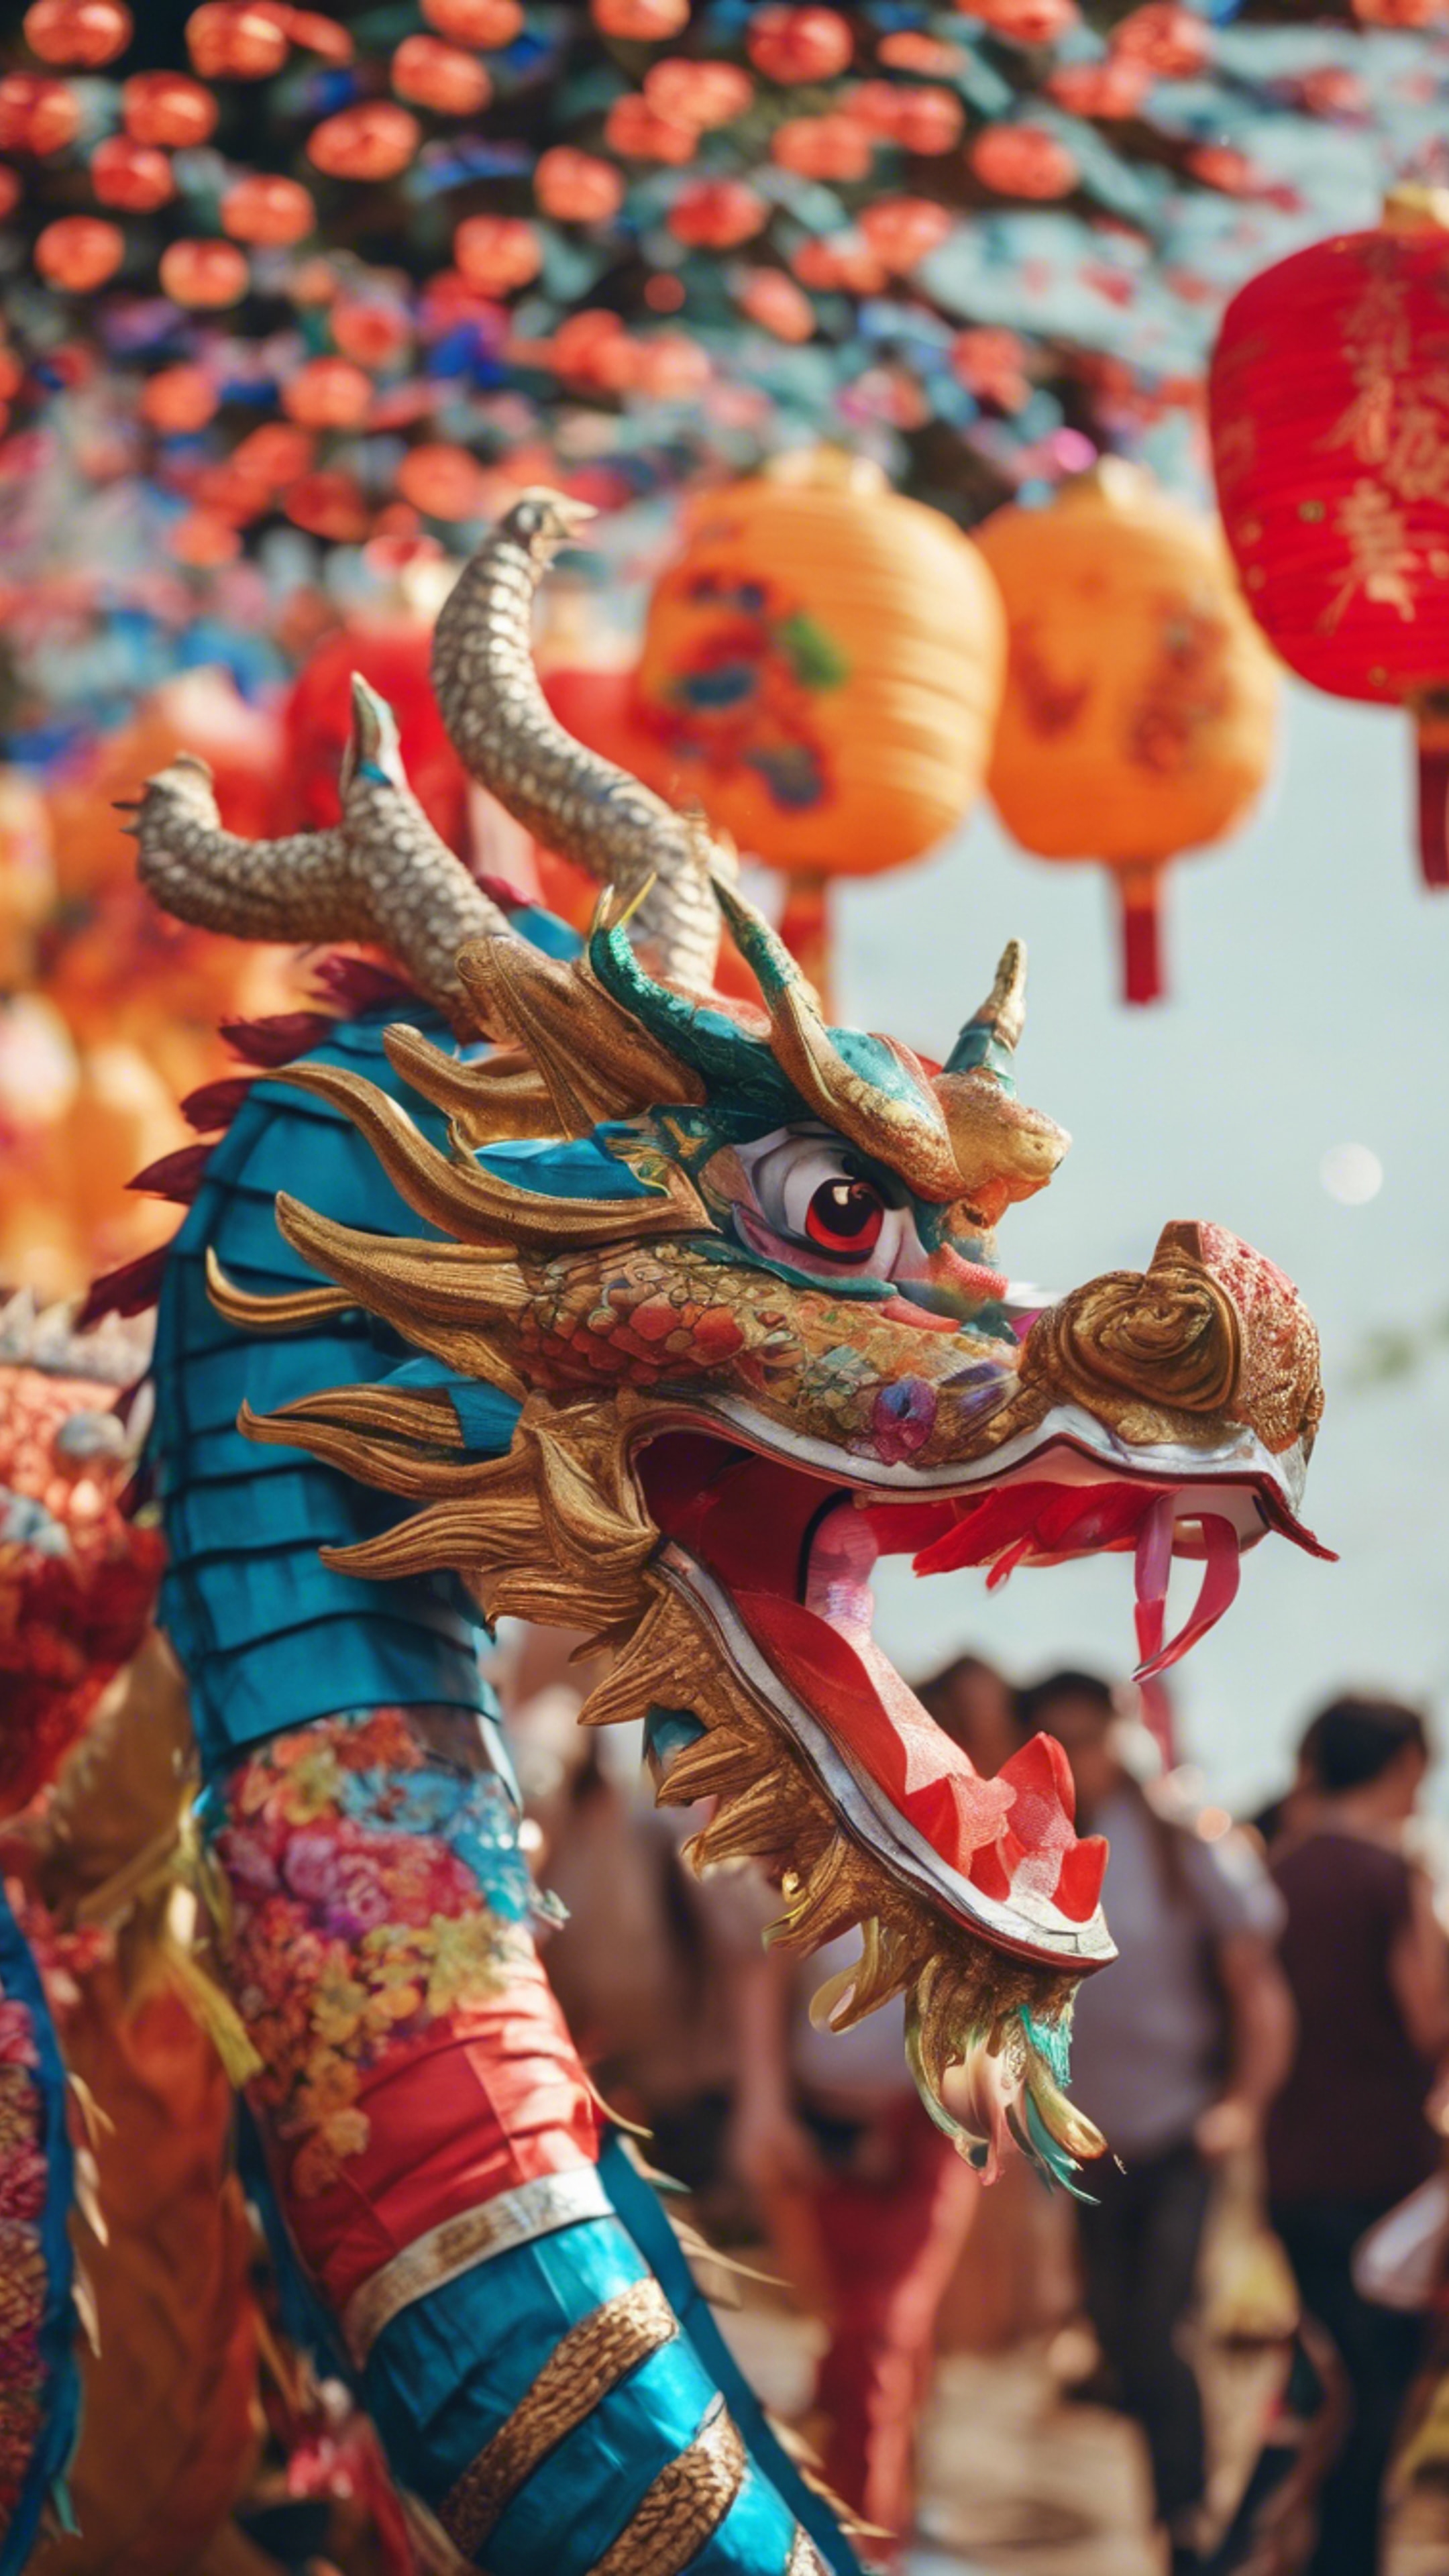 An oriental-style dragon parading amidst a colorful festival with paper lanterns.壁紙[5877da5b29174274b3e8]